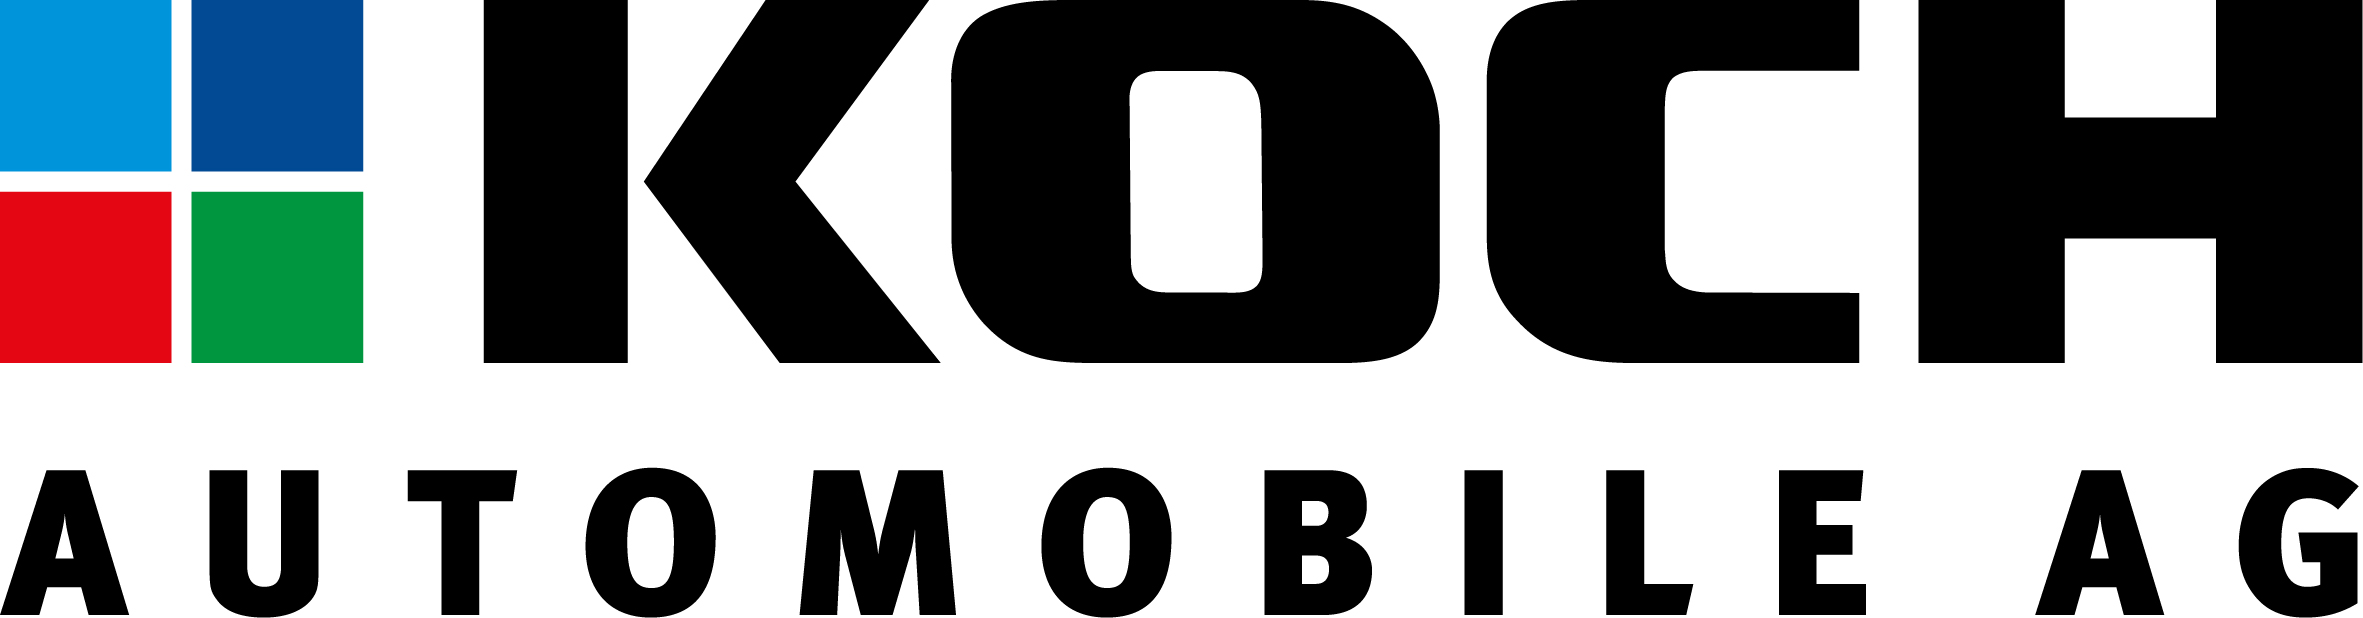 Koch automobile logo